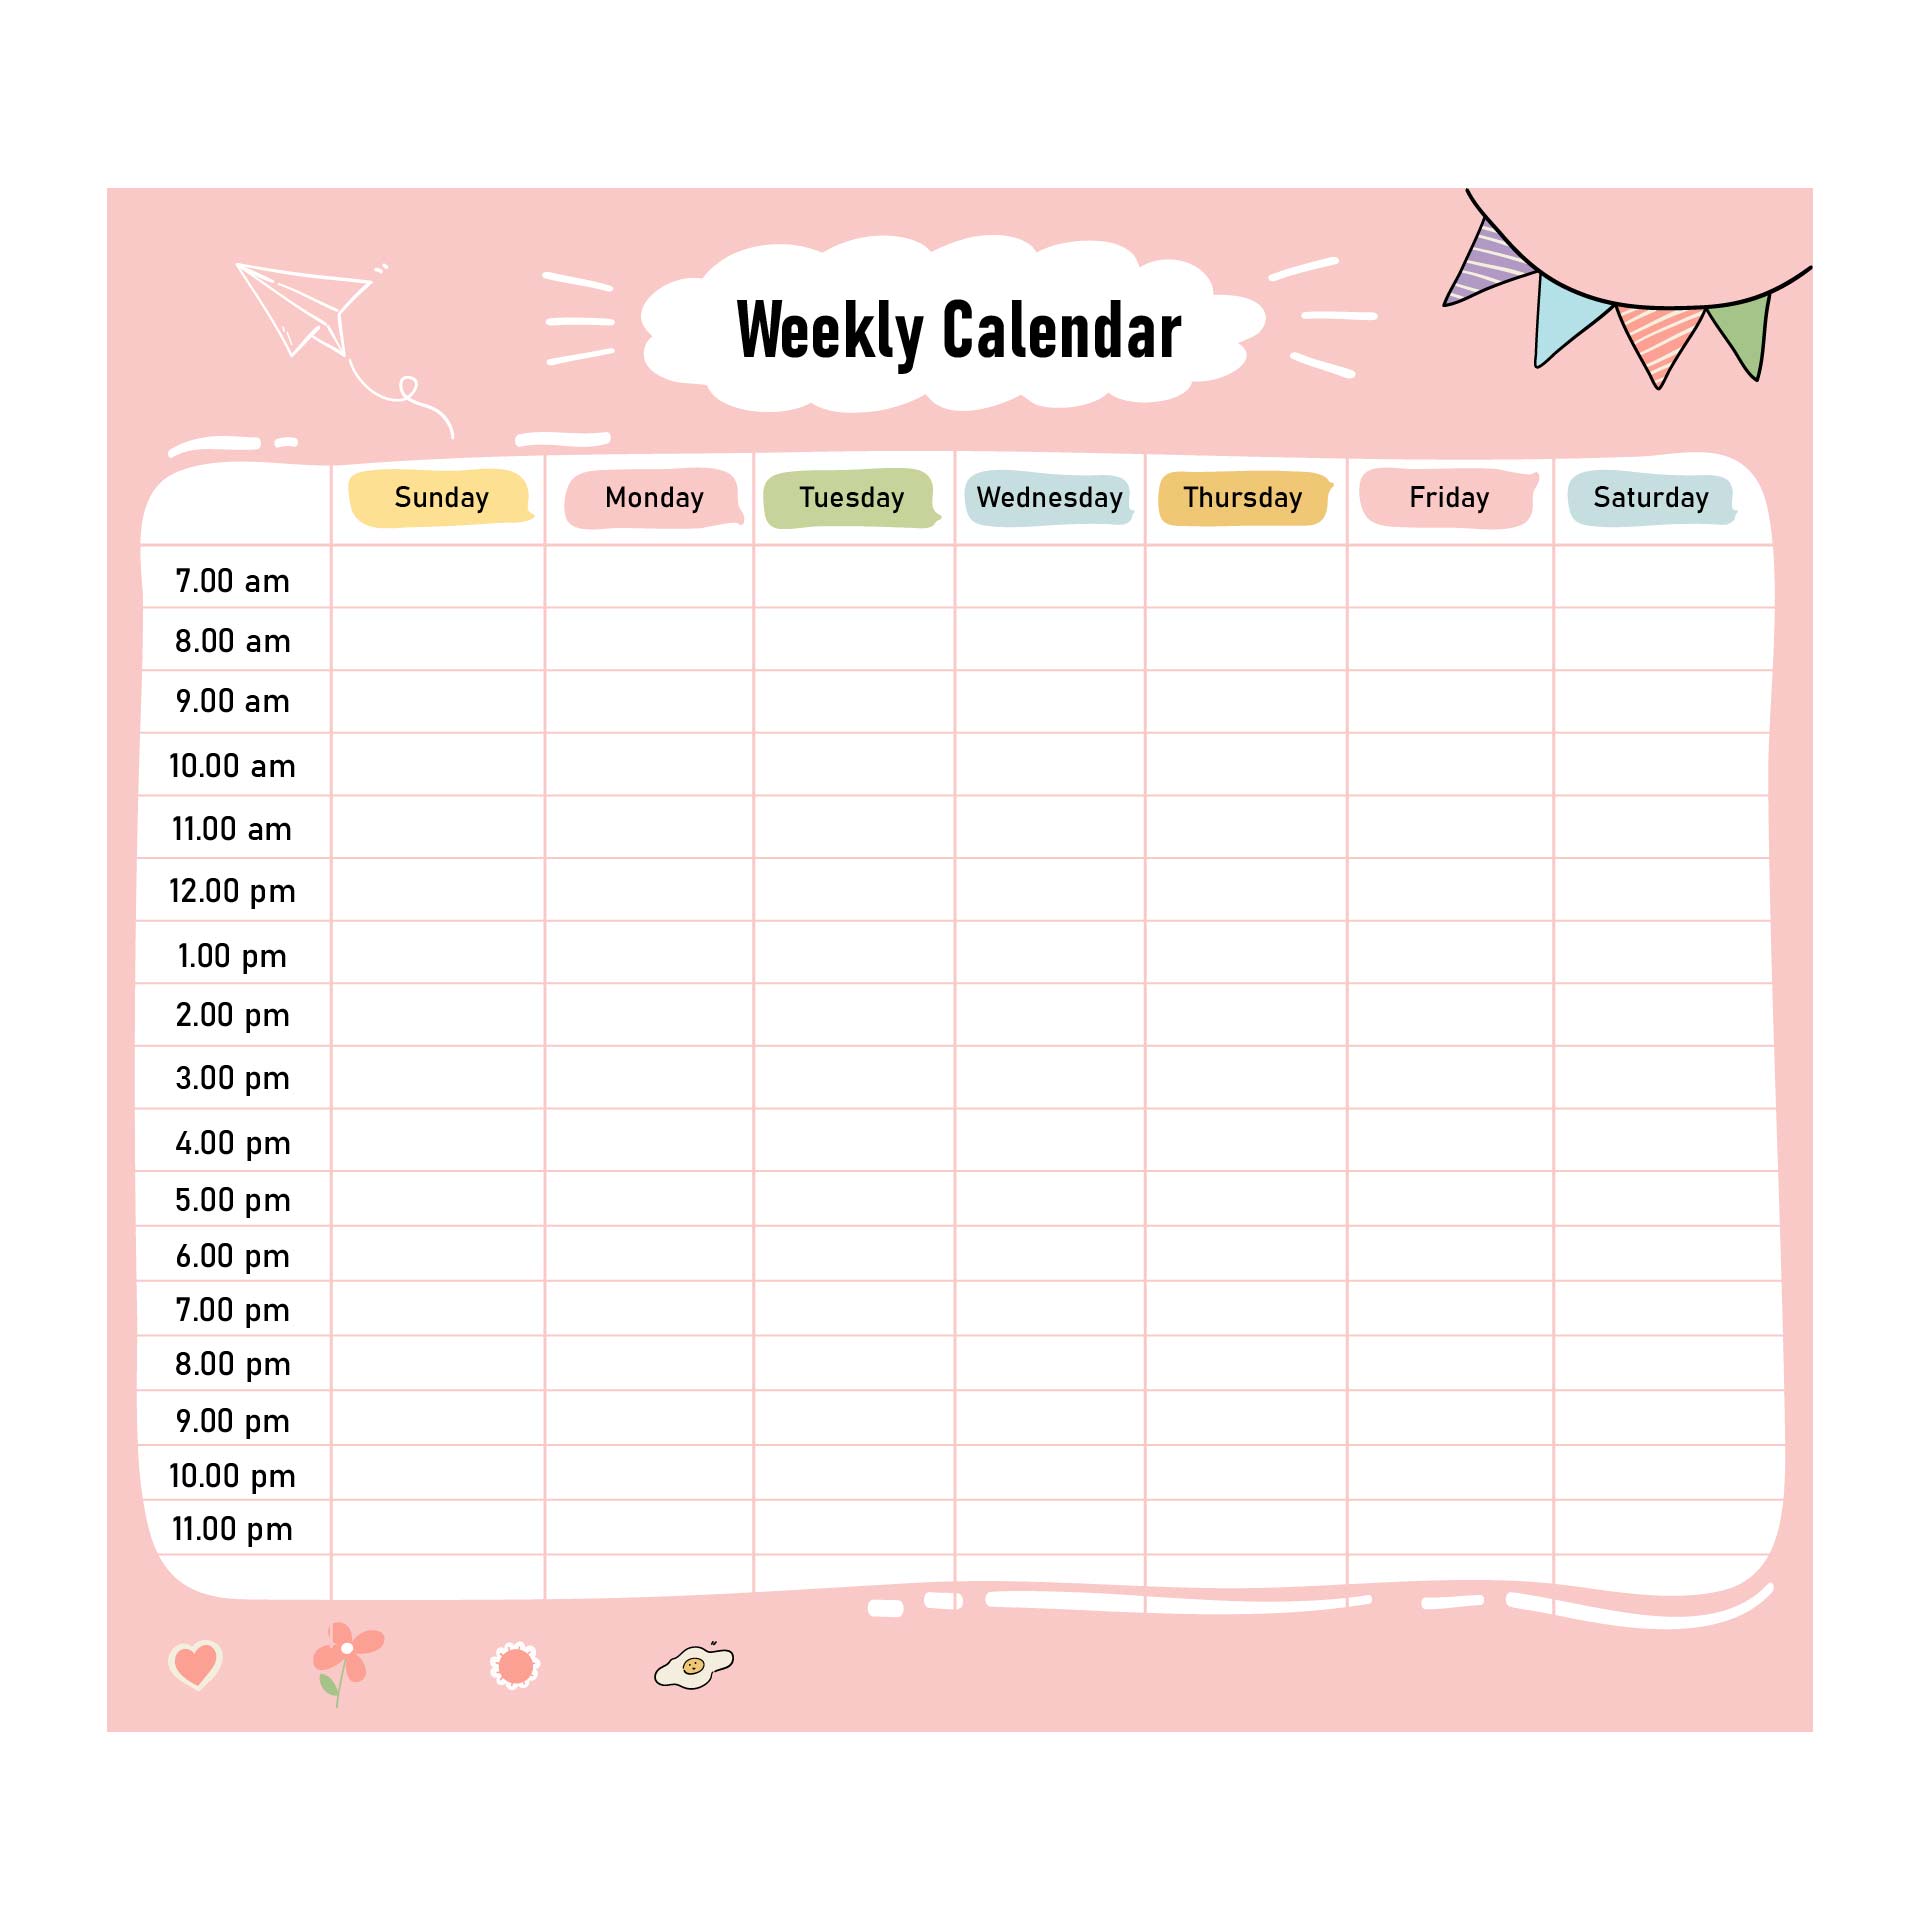 Free Printable Weekly Calendar With Time Slots 2021